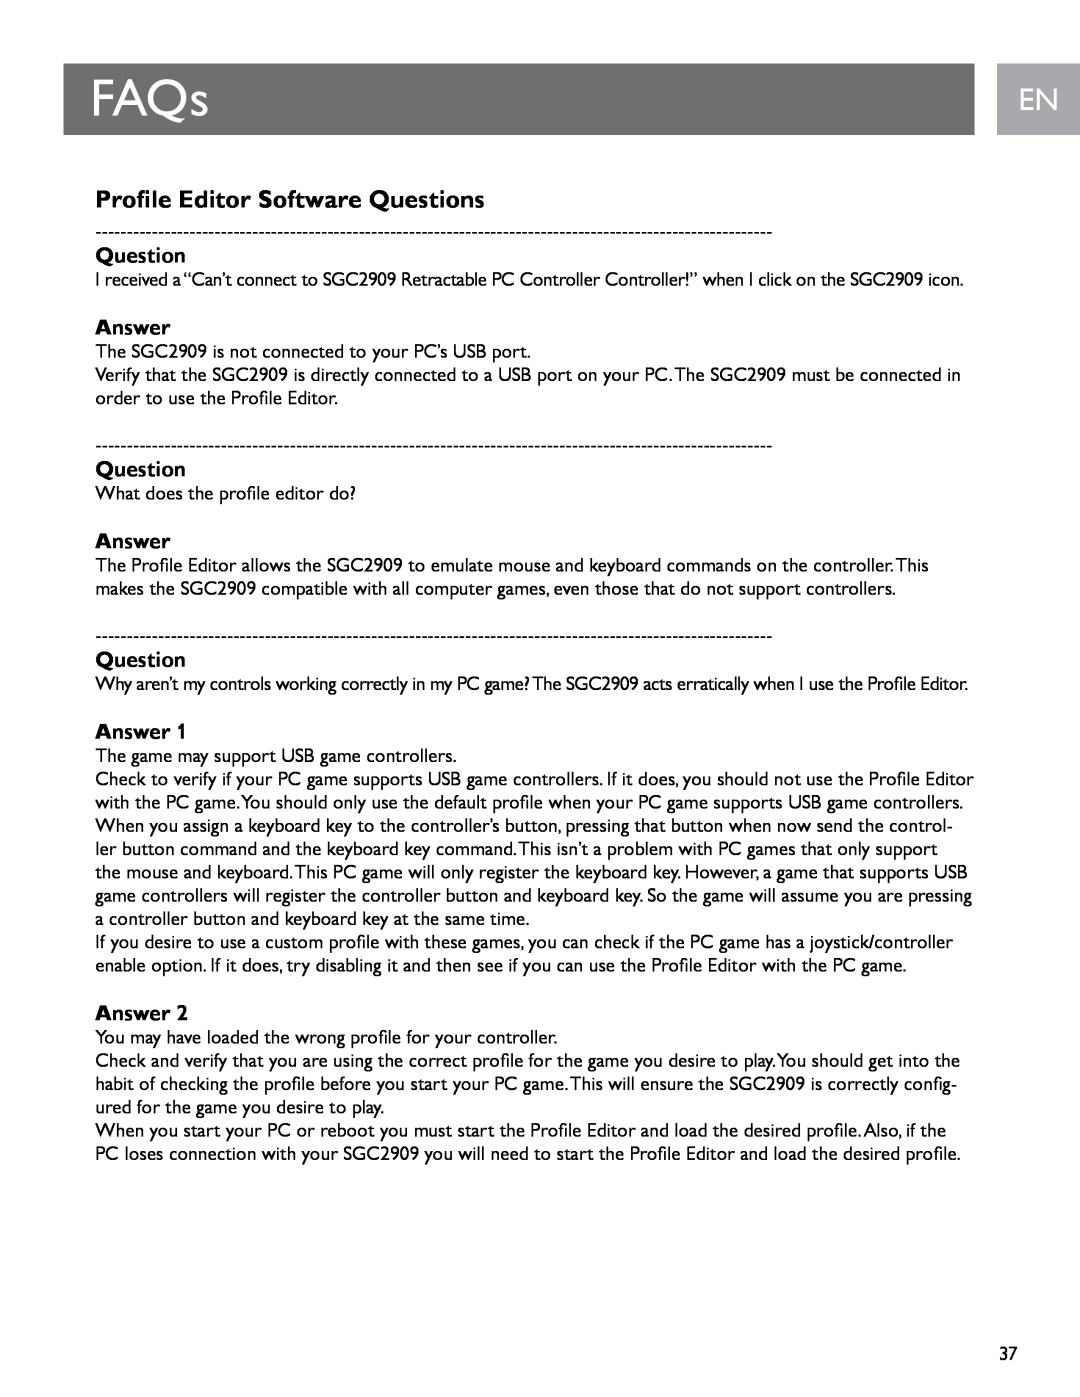 Philips SGC2909 user manual Profile Editor Software Questions, FAQs, En En, Answer 